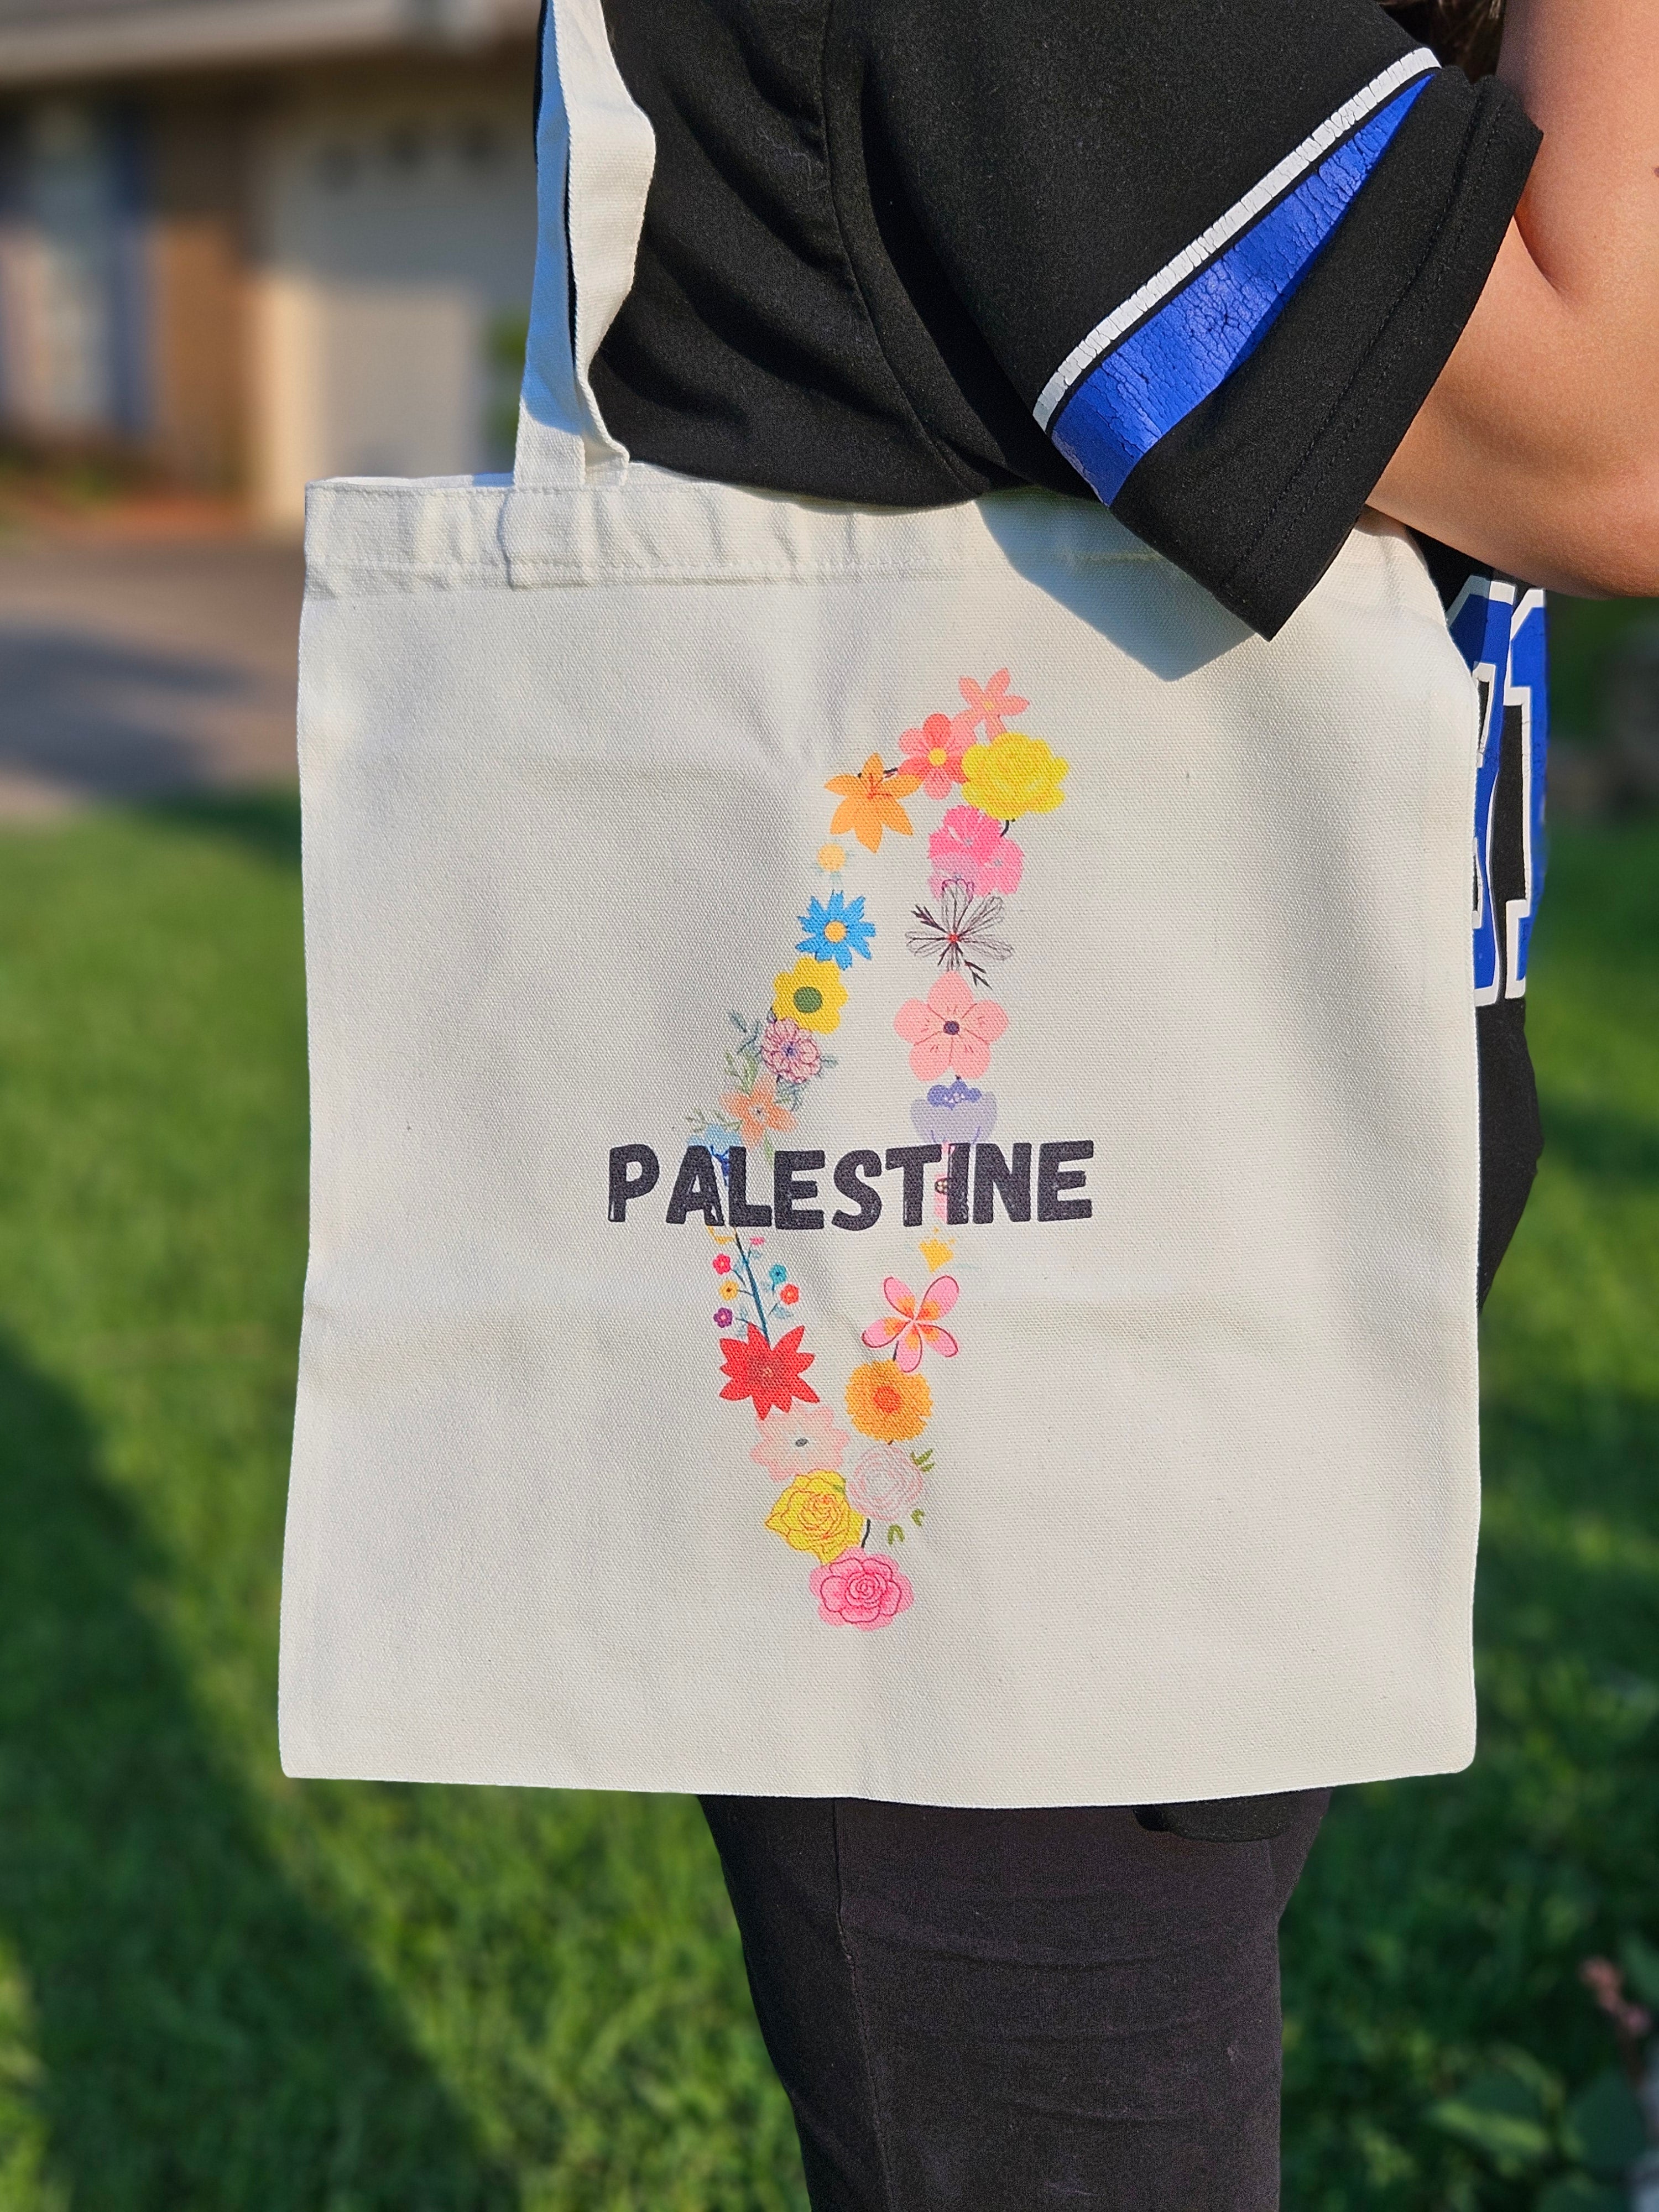 Palestine Tote Bags